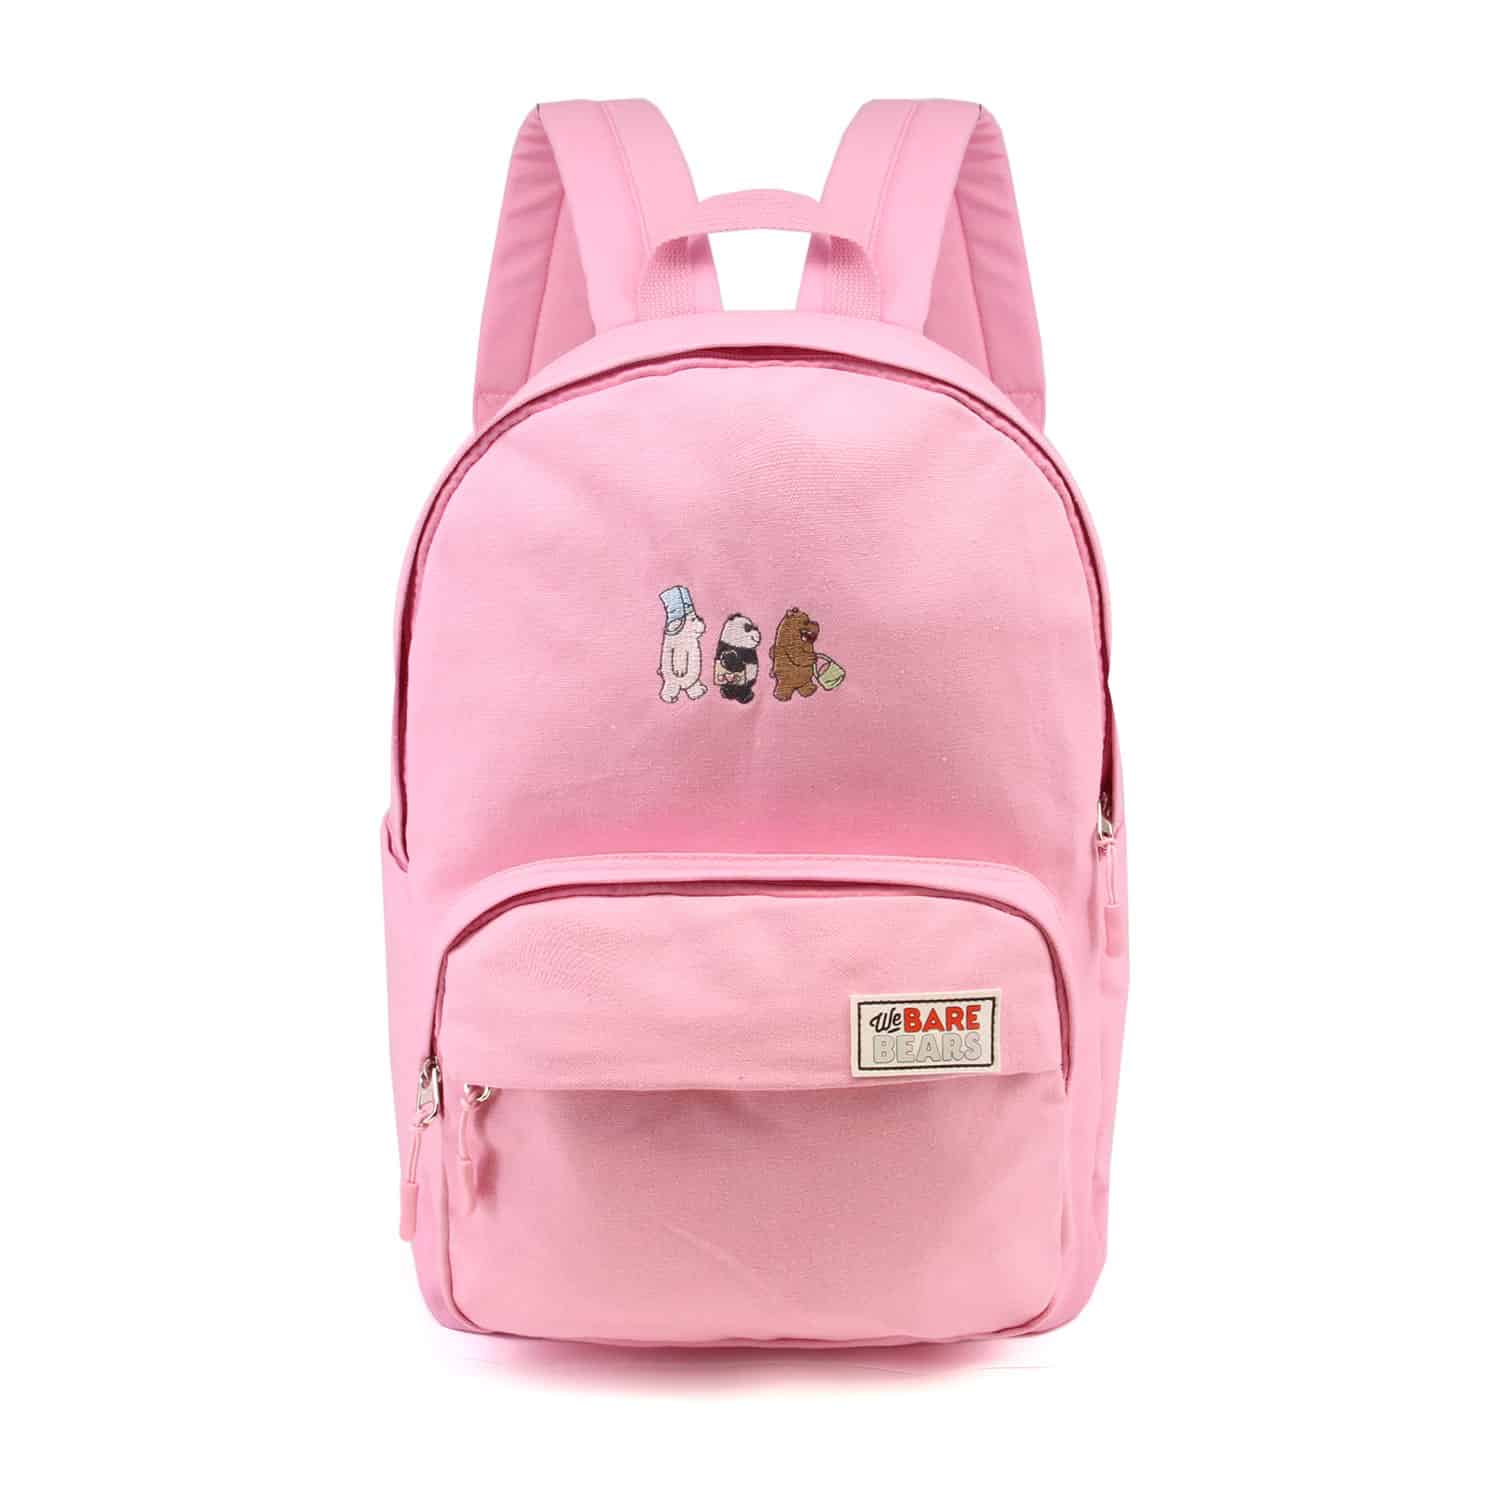 We Bare Bears - Pink Freetime Backpack